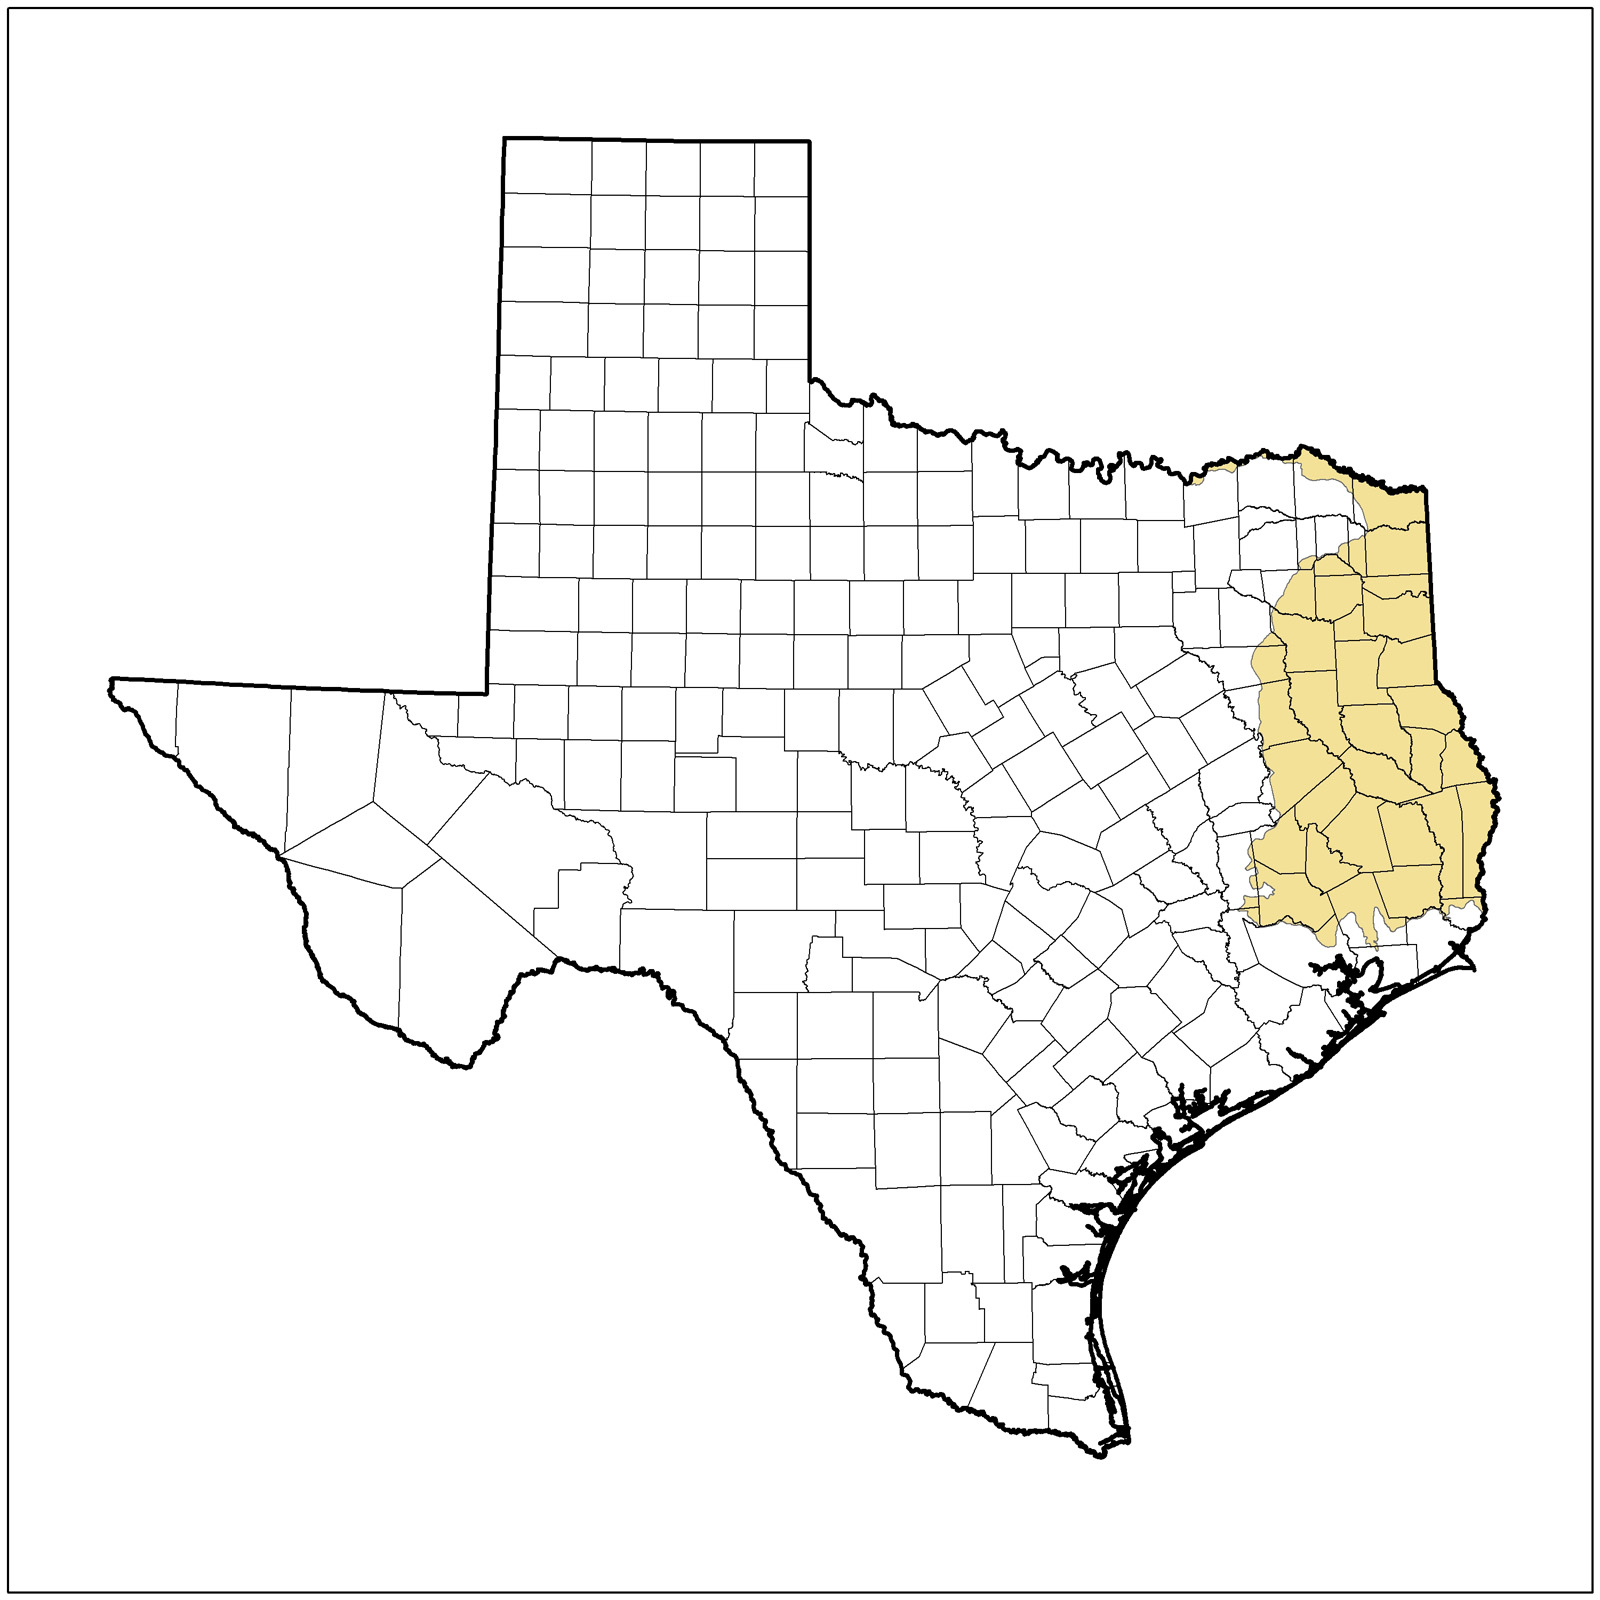 Western Gulf Coastal Plain (Pineywoods) Ecoregion of Texas